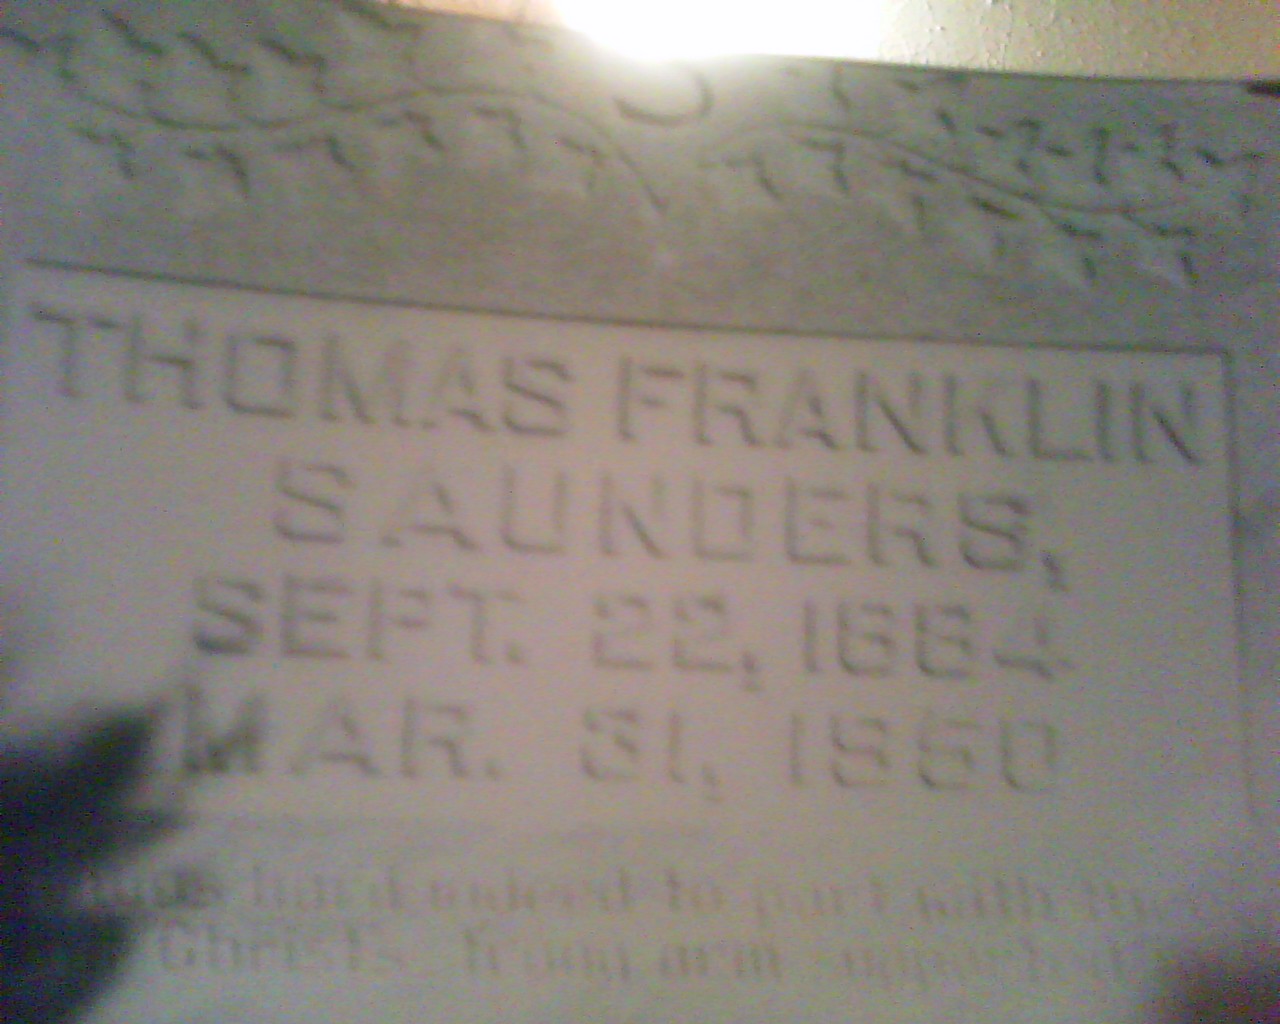 Gravestone of Thomas Franklin Saunders